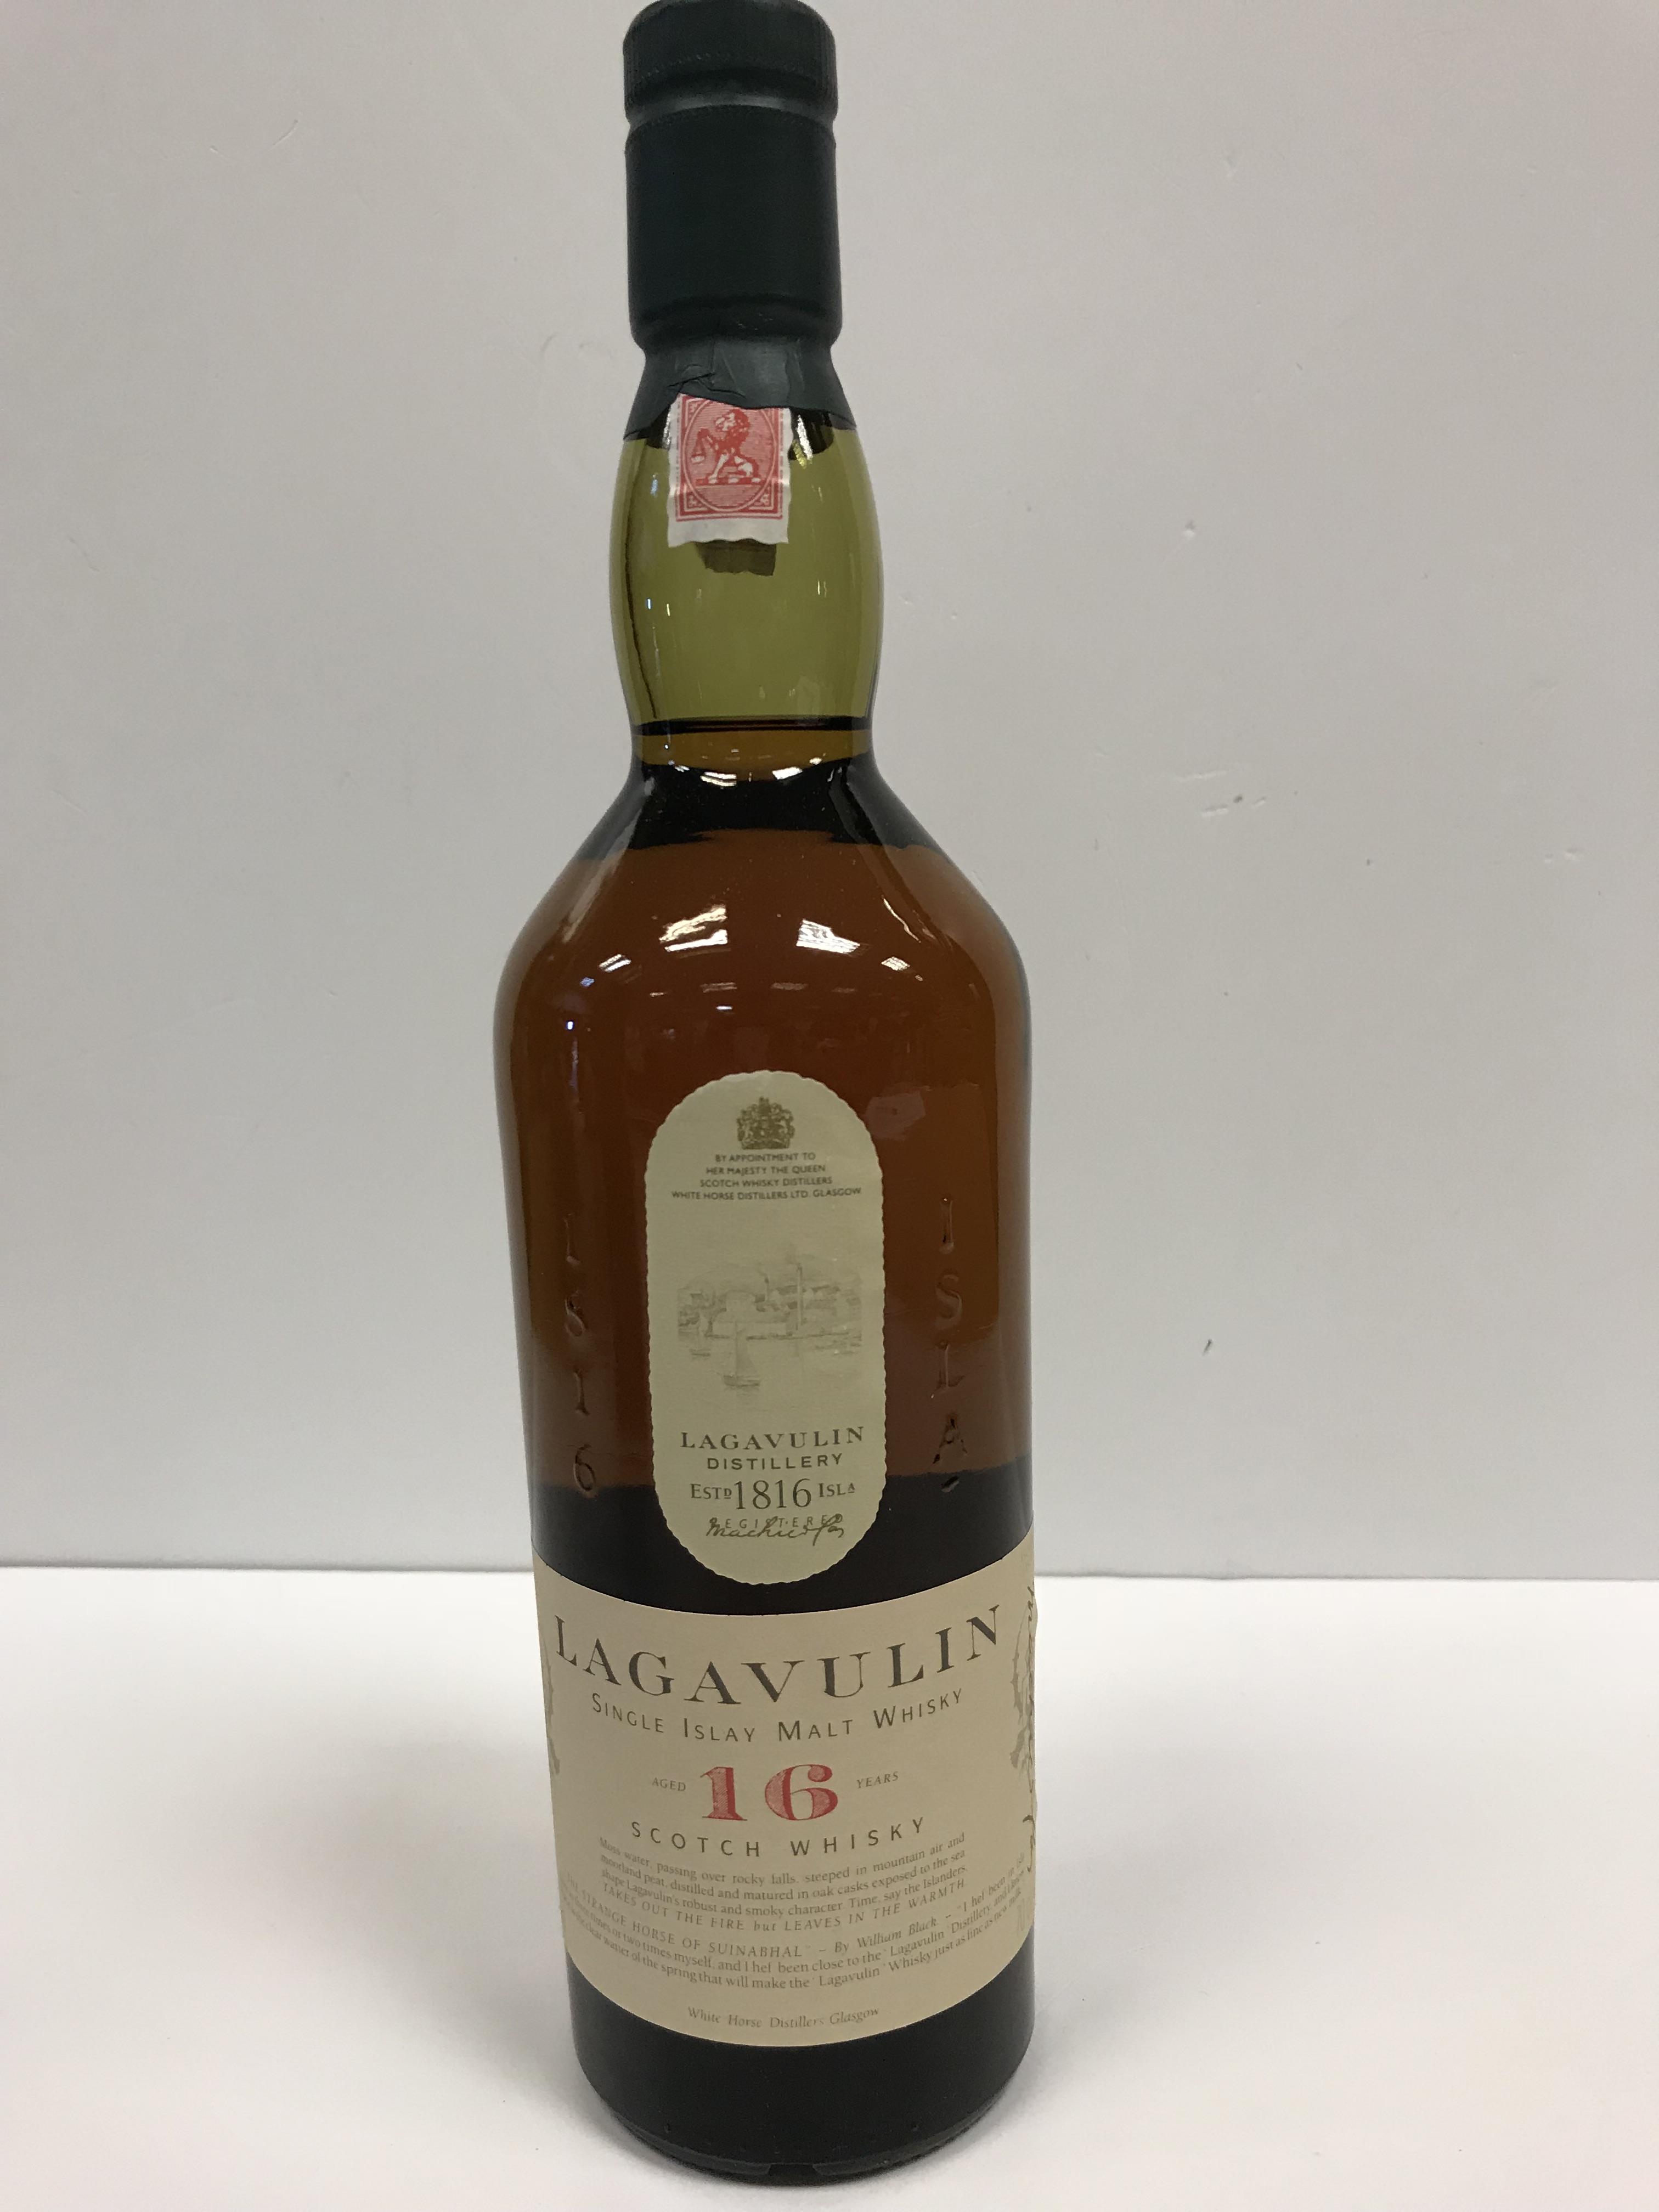 Lagavulin Single Islay Malt Whisky 16 year old x 1 bottle (original box) - Image 3 of 3